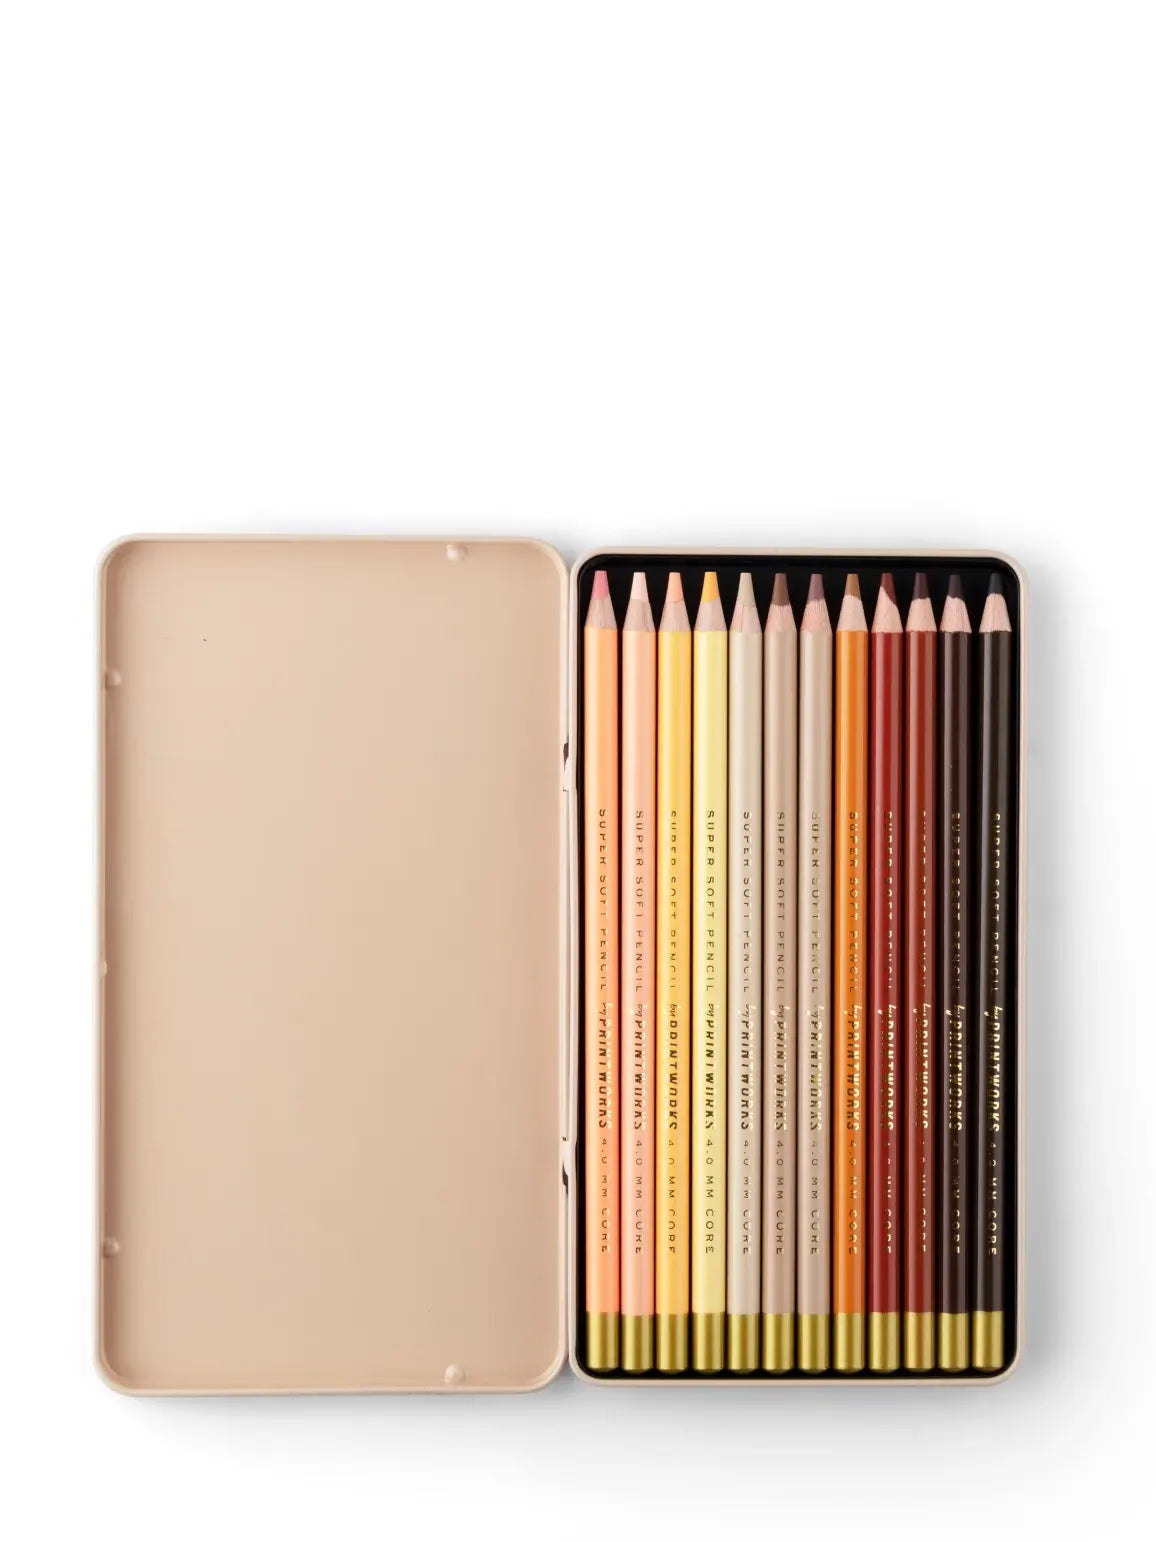 12 Colour Pencils, Skin tones